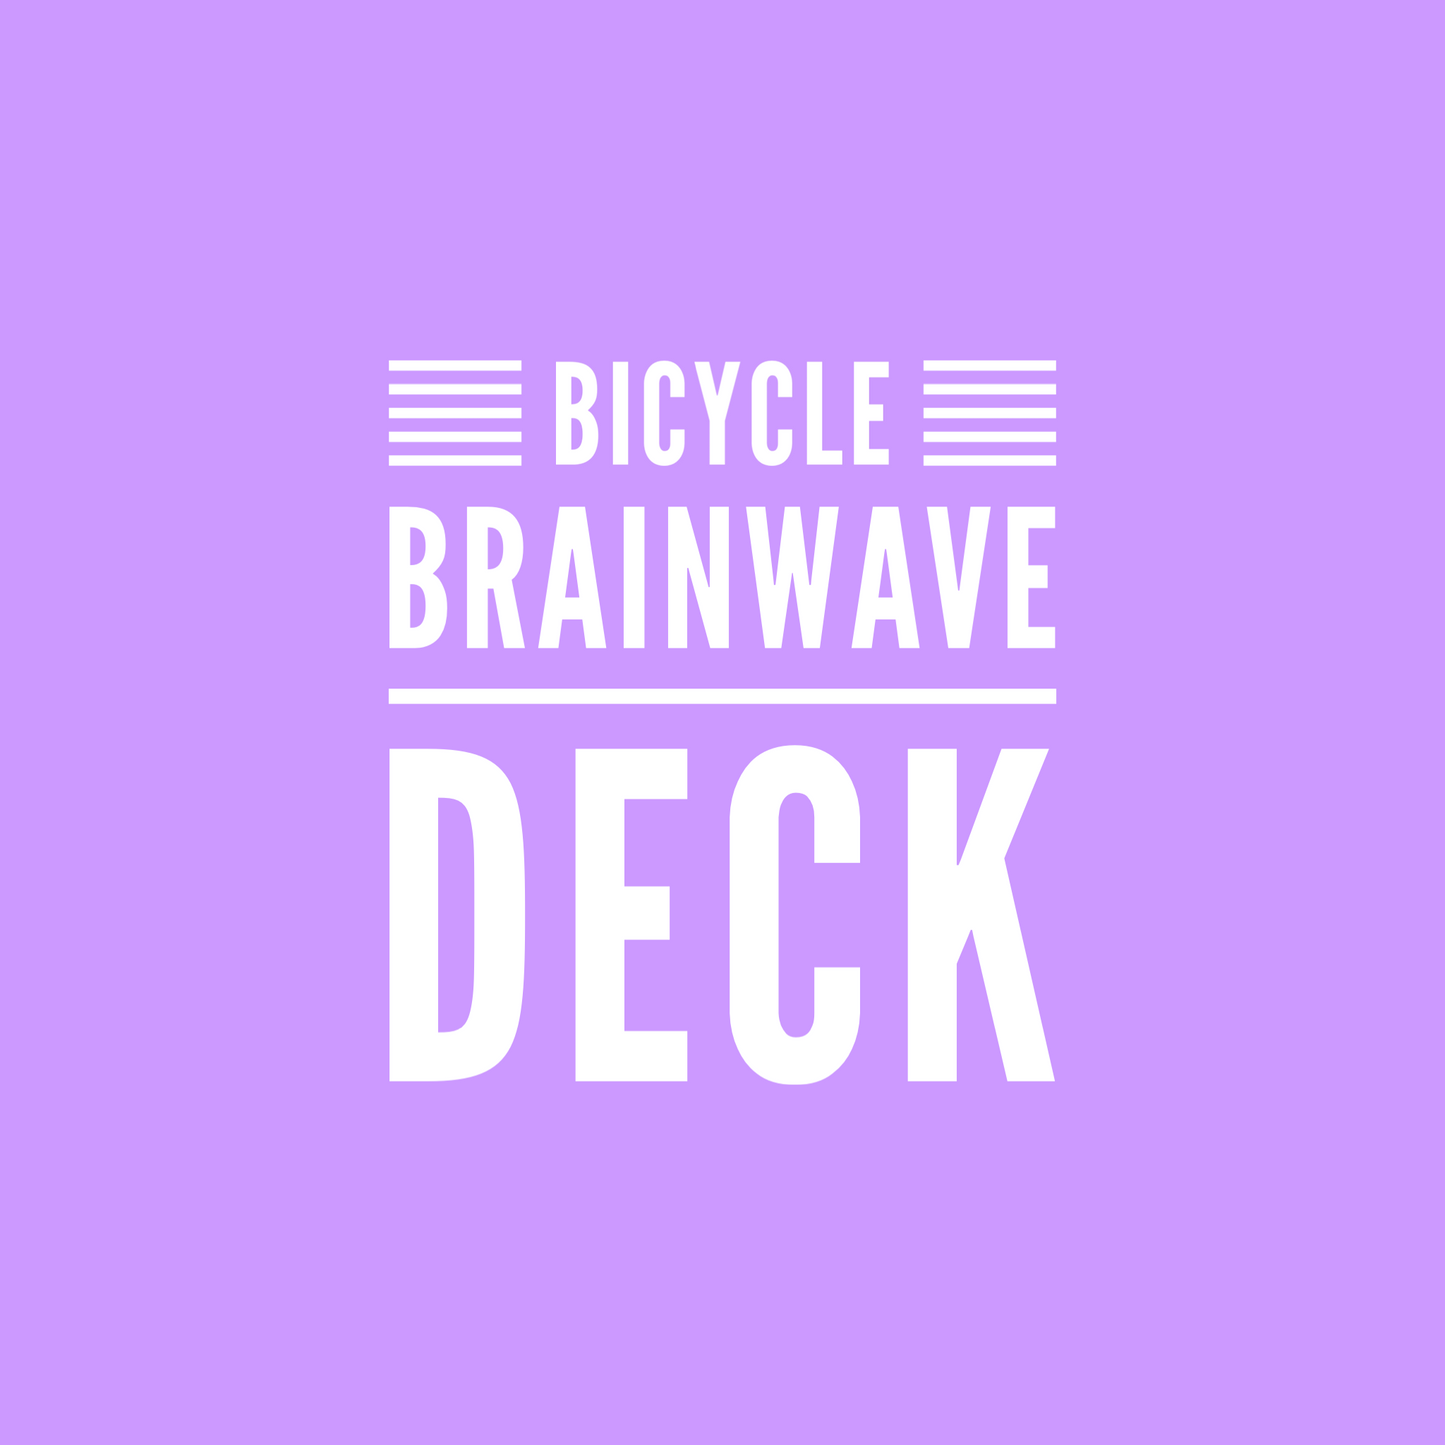 Brainwave Deck - Bicycle Stock - Kaymar Magic